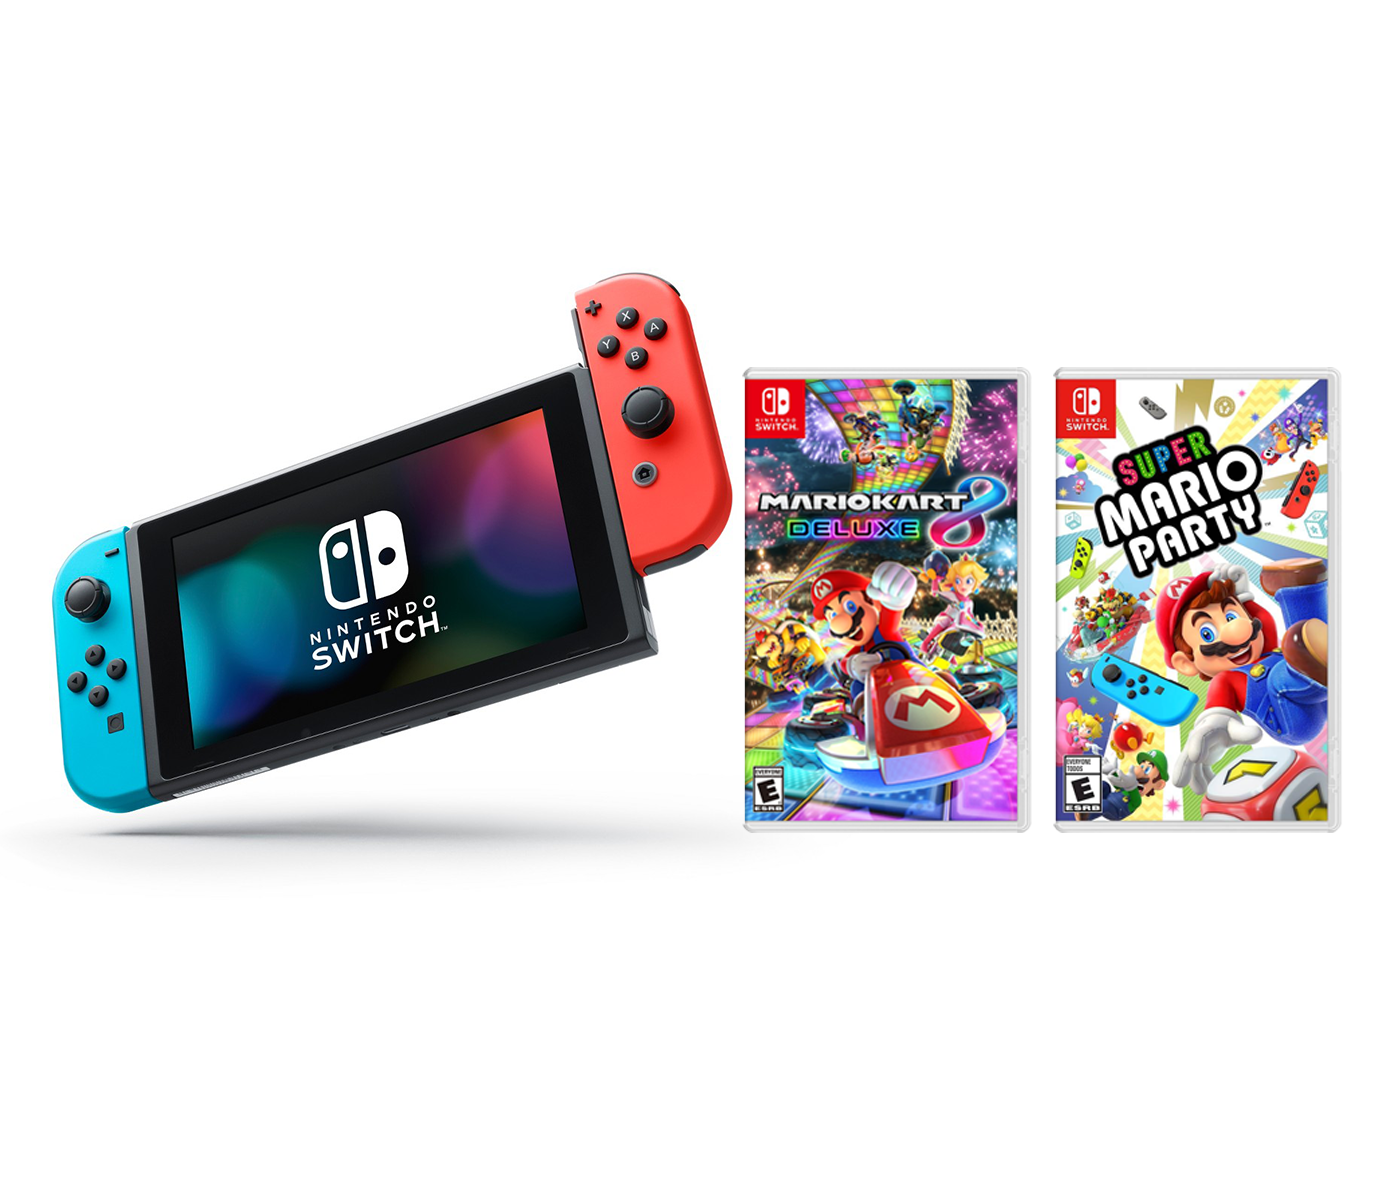 Nintendo Switch Mario Party Bundle: Super Mario Party, Mario Kart 8 Deluxe and Nintendo Switch 32GB Console with Neon Red and Blue Joy-Con - image 1 of 9